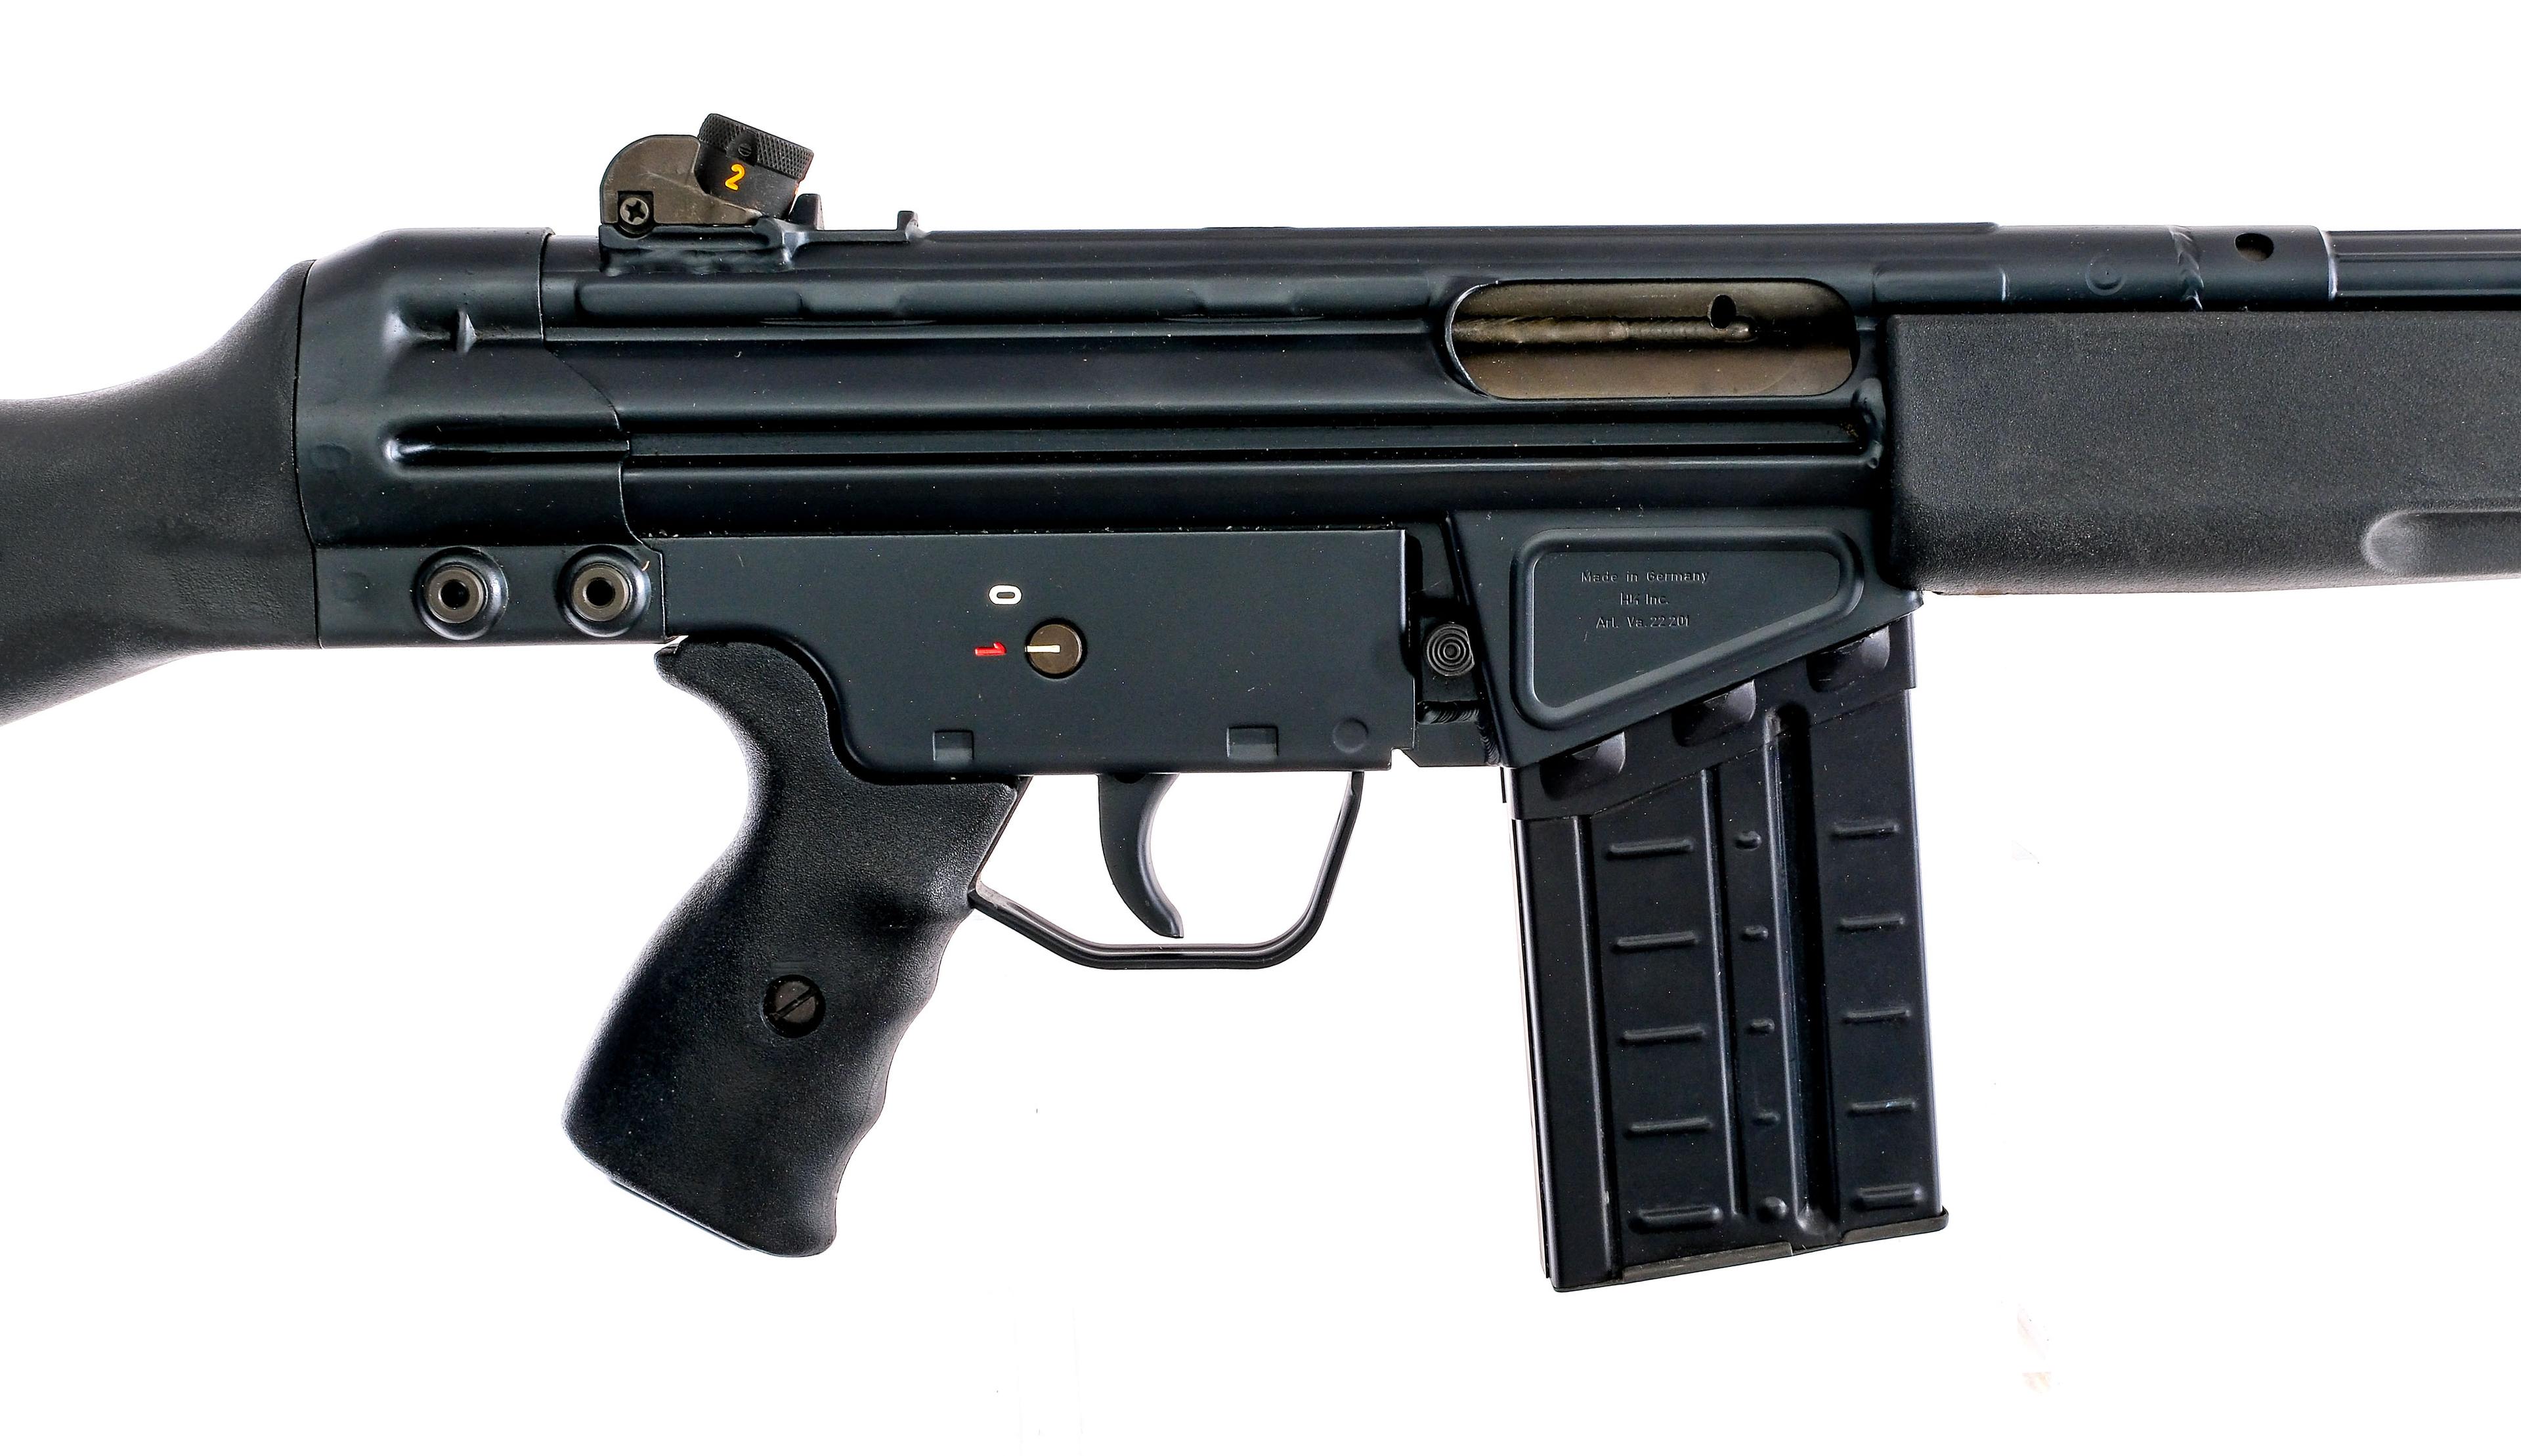 HK 91 .308 Semi Auto Rifle